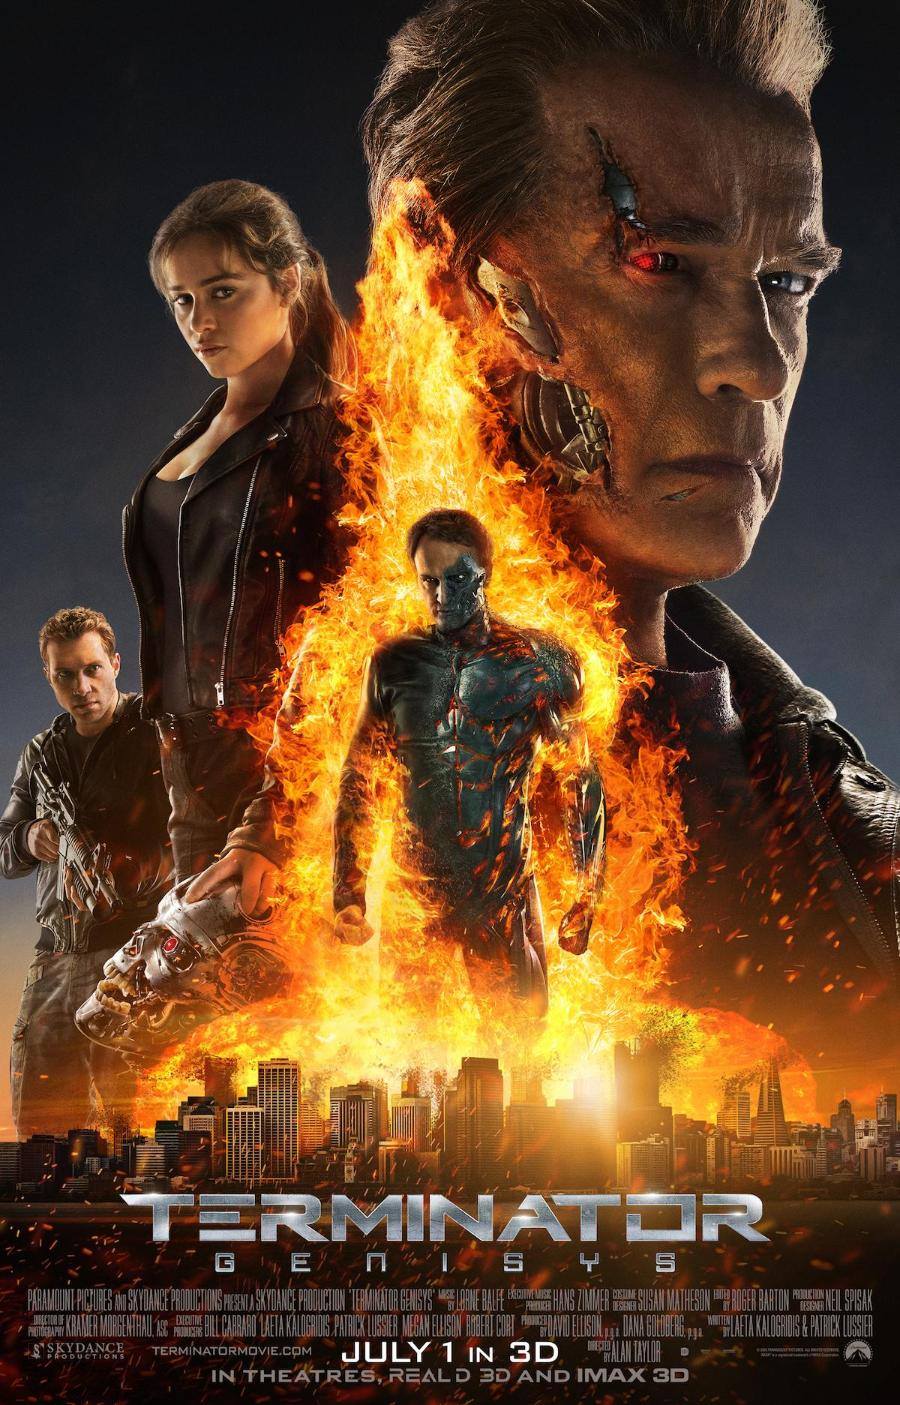 Terminator_poster